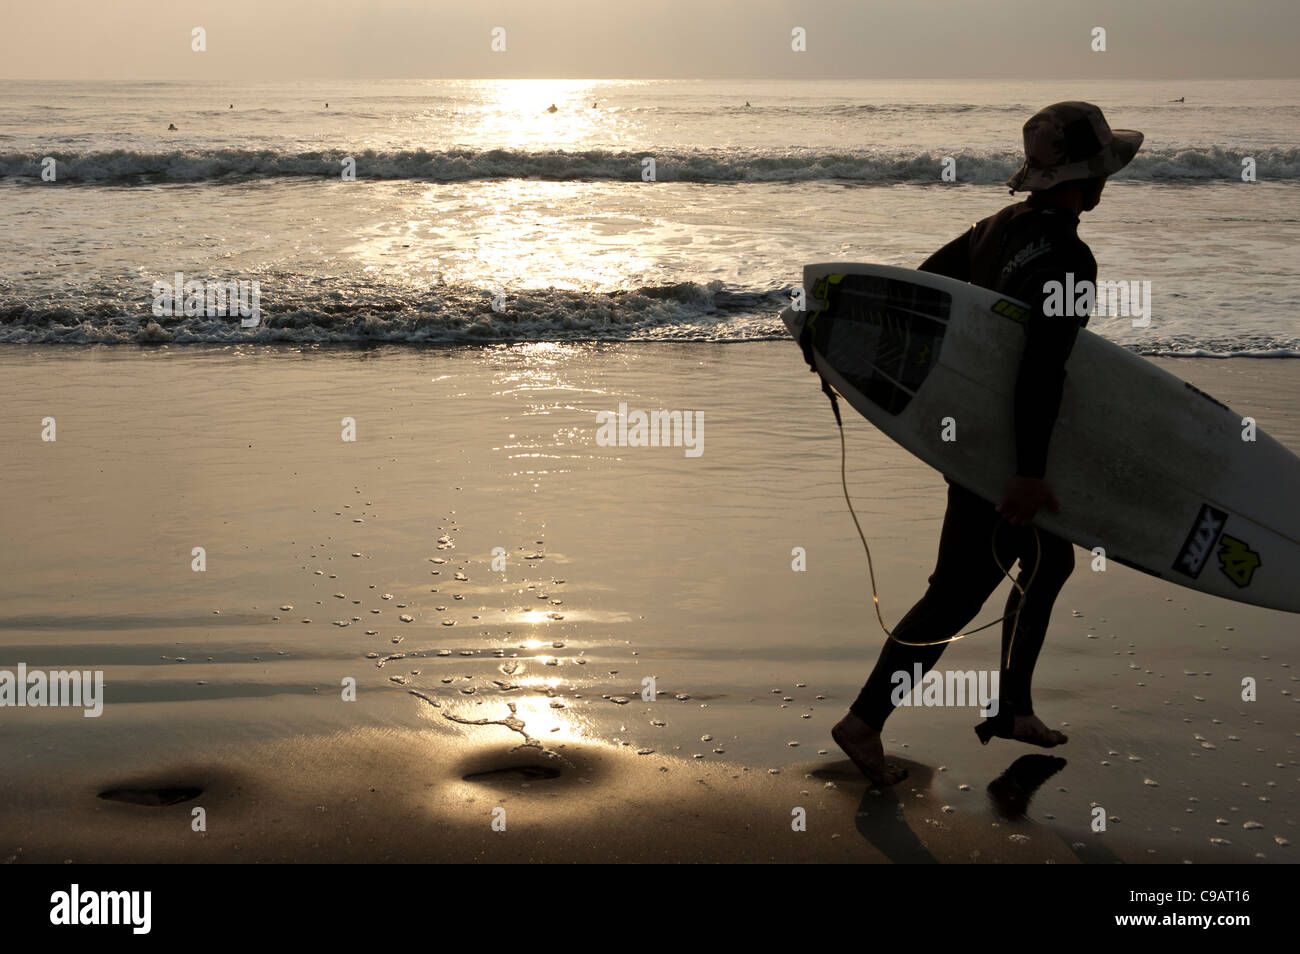 sunrise surfer surfboard Japan beach surfing Stock Photo